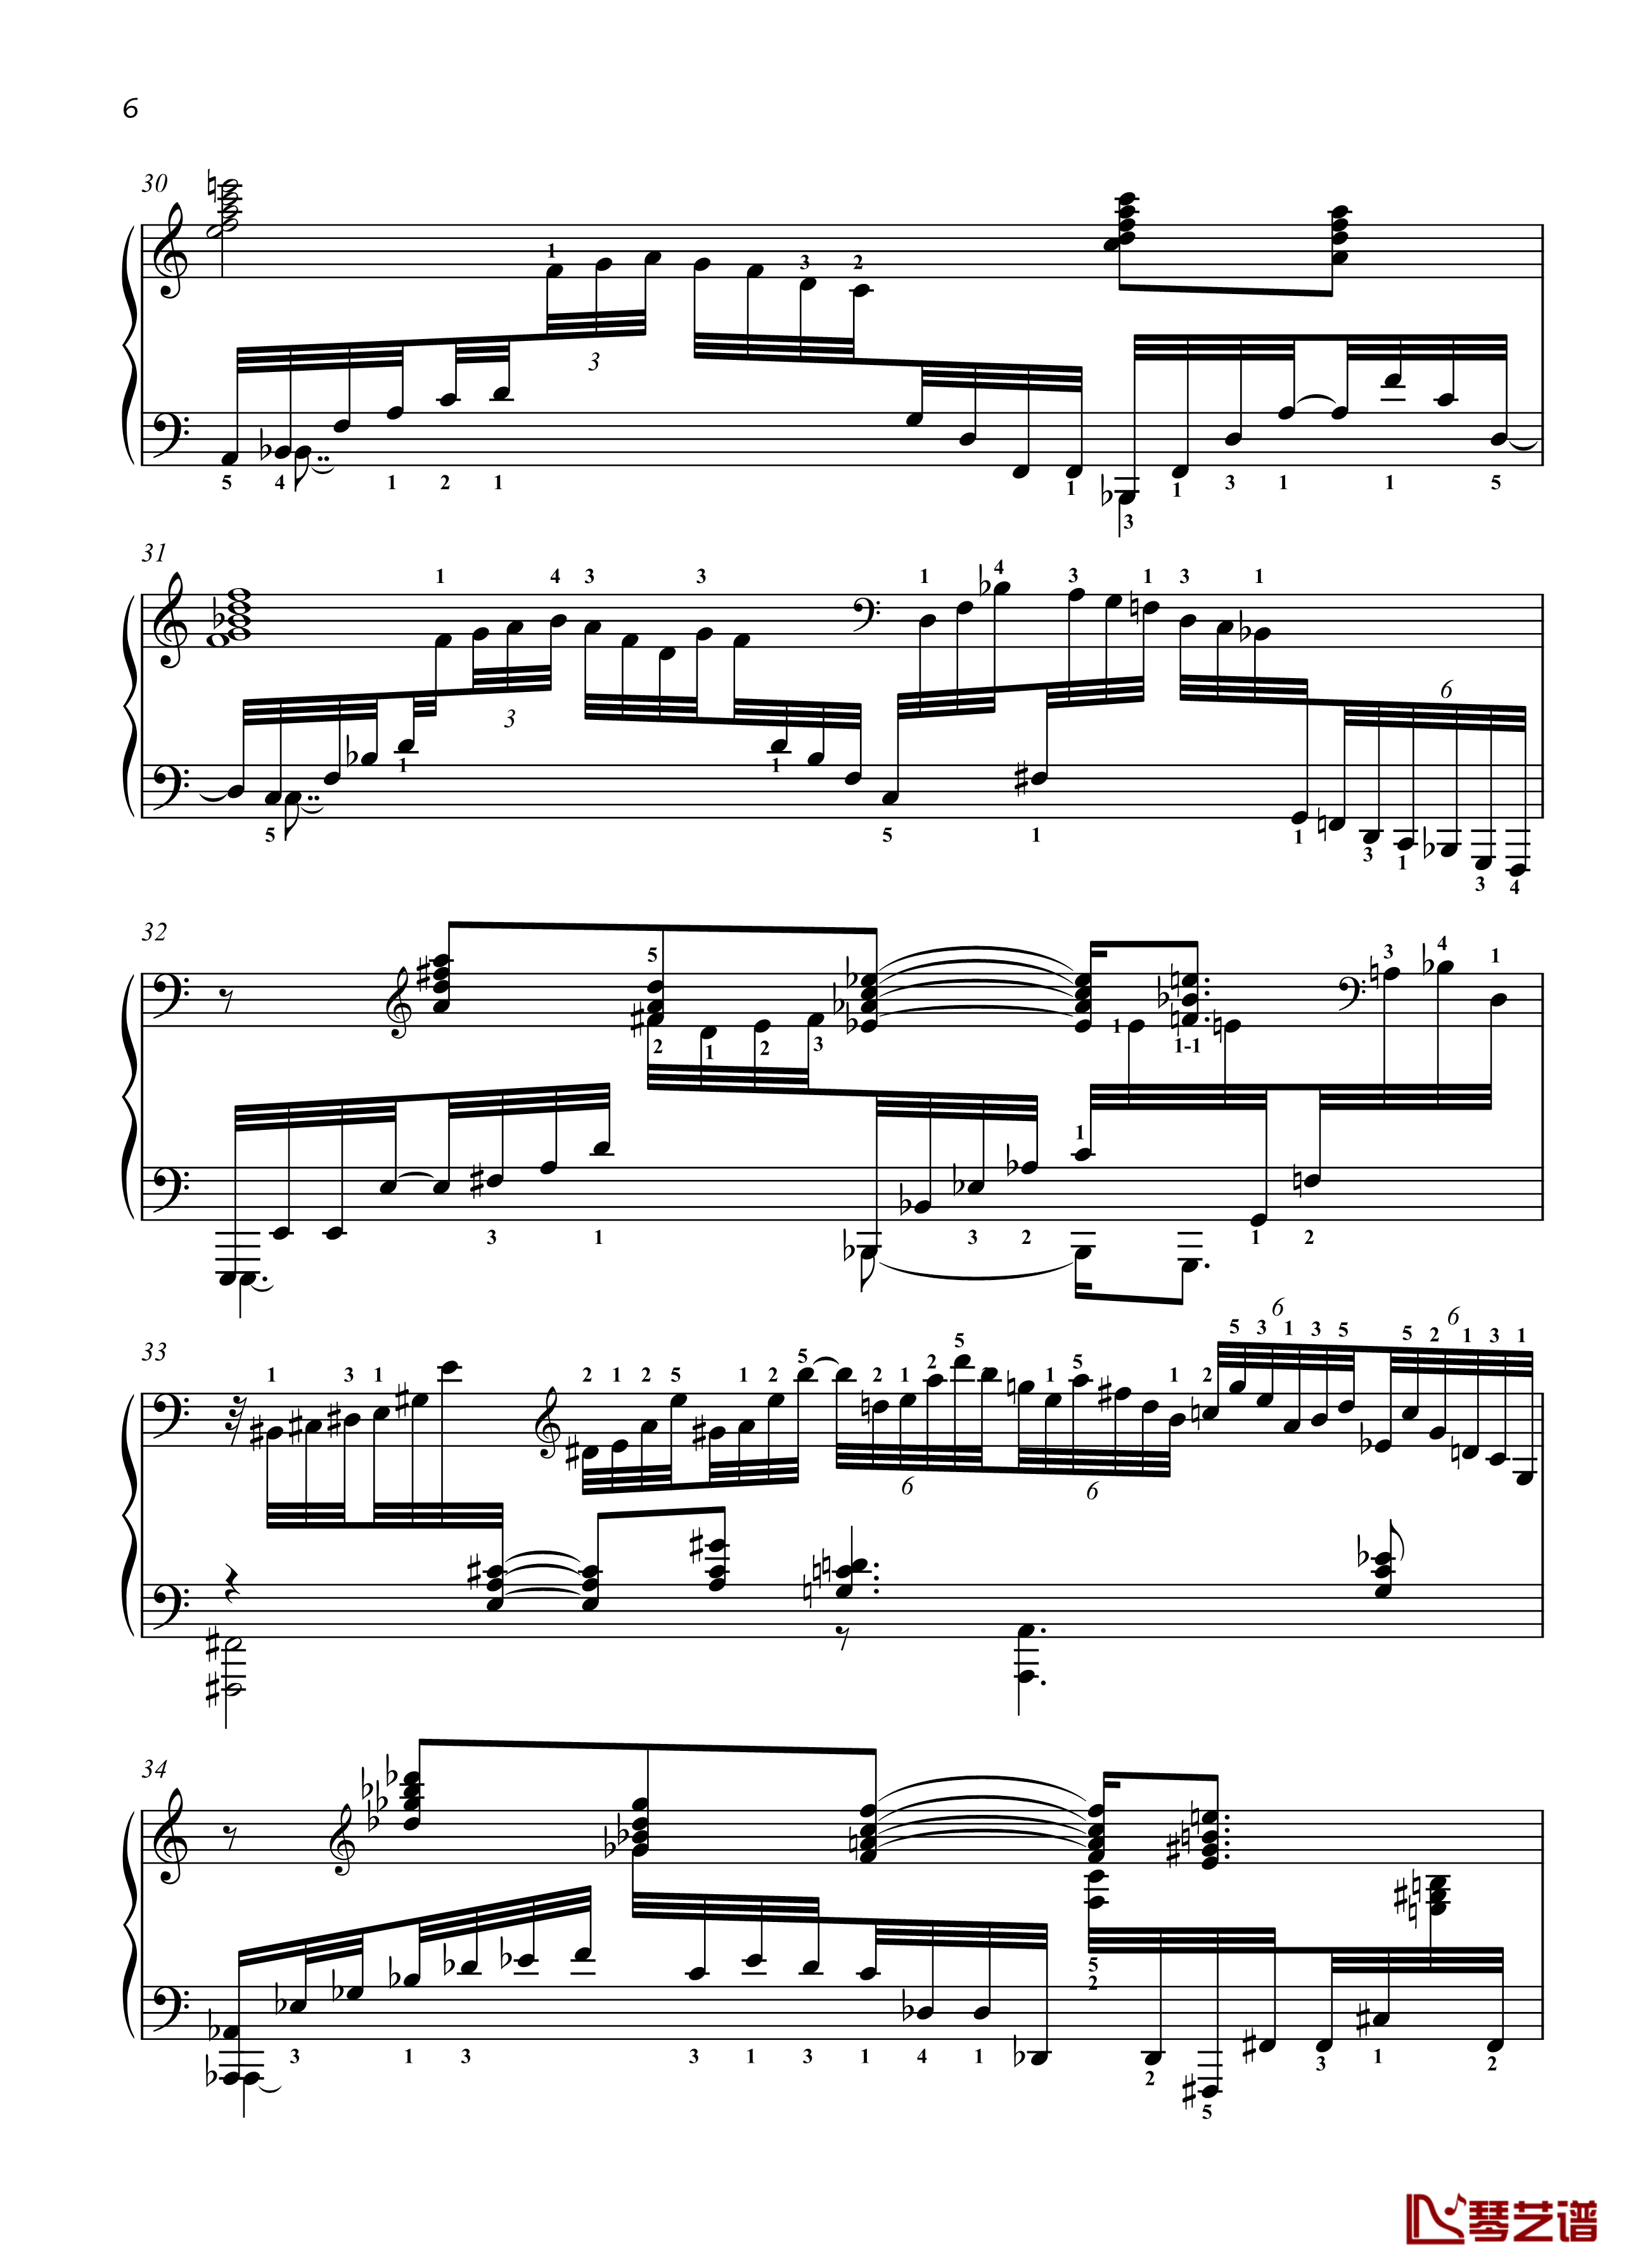 No. 4. Reminiscence钢琴谱-带指法-八首音乐会练习曲  Eight Concert ?tudes Op 40 - -爵士-尼古拉·凯帕斯汀6